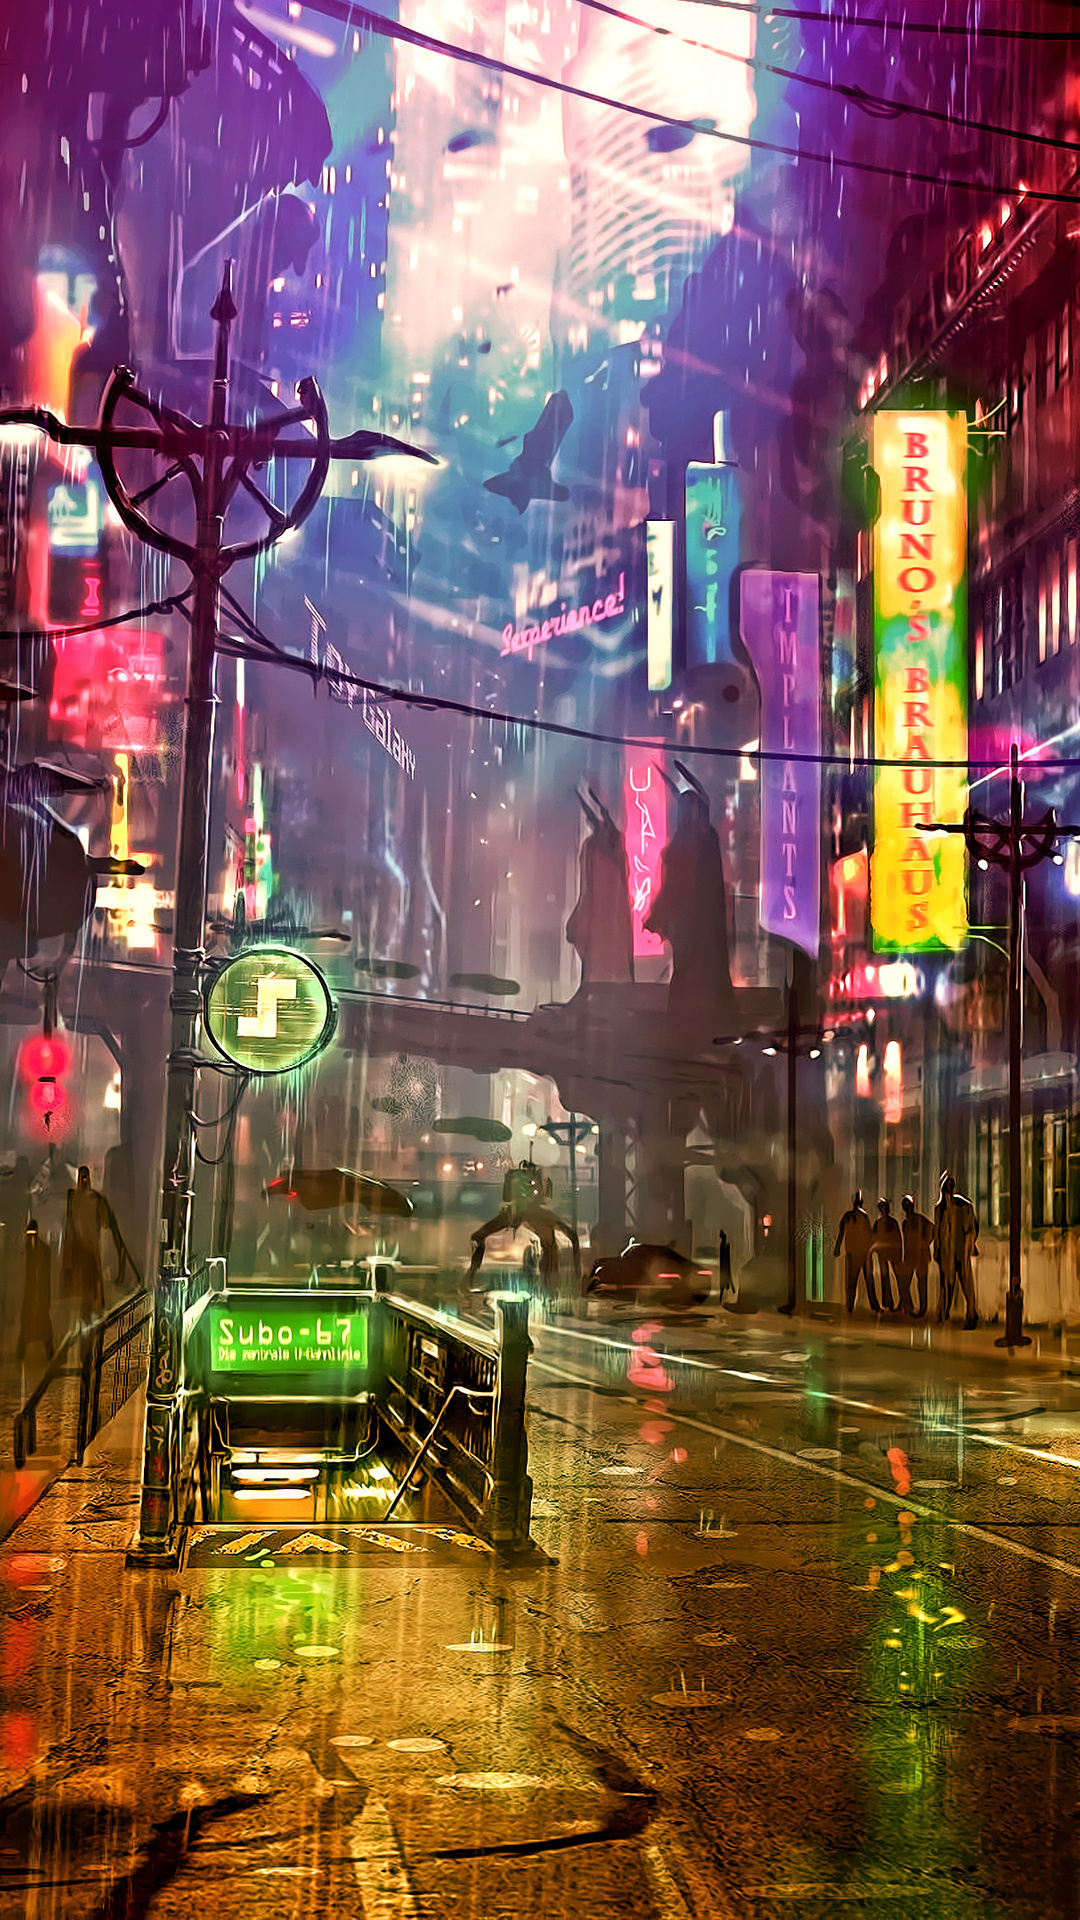 Futuristic City Cyberpunk Neon Street Digital Art 4k iPhone 6s, 6 Plus, Pixel xl , One Plus 3t, 5 HD 4k Wallpaper, Image, Background, Photo and Picture